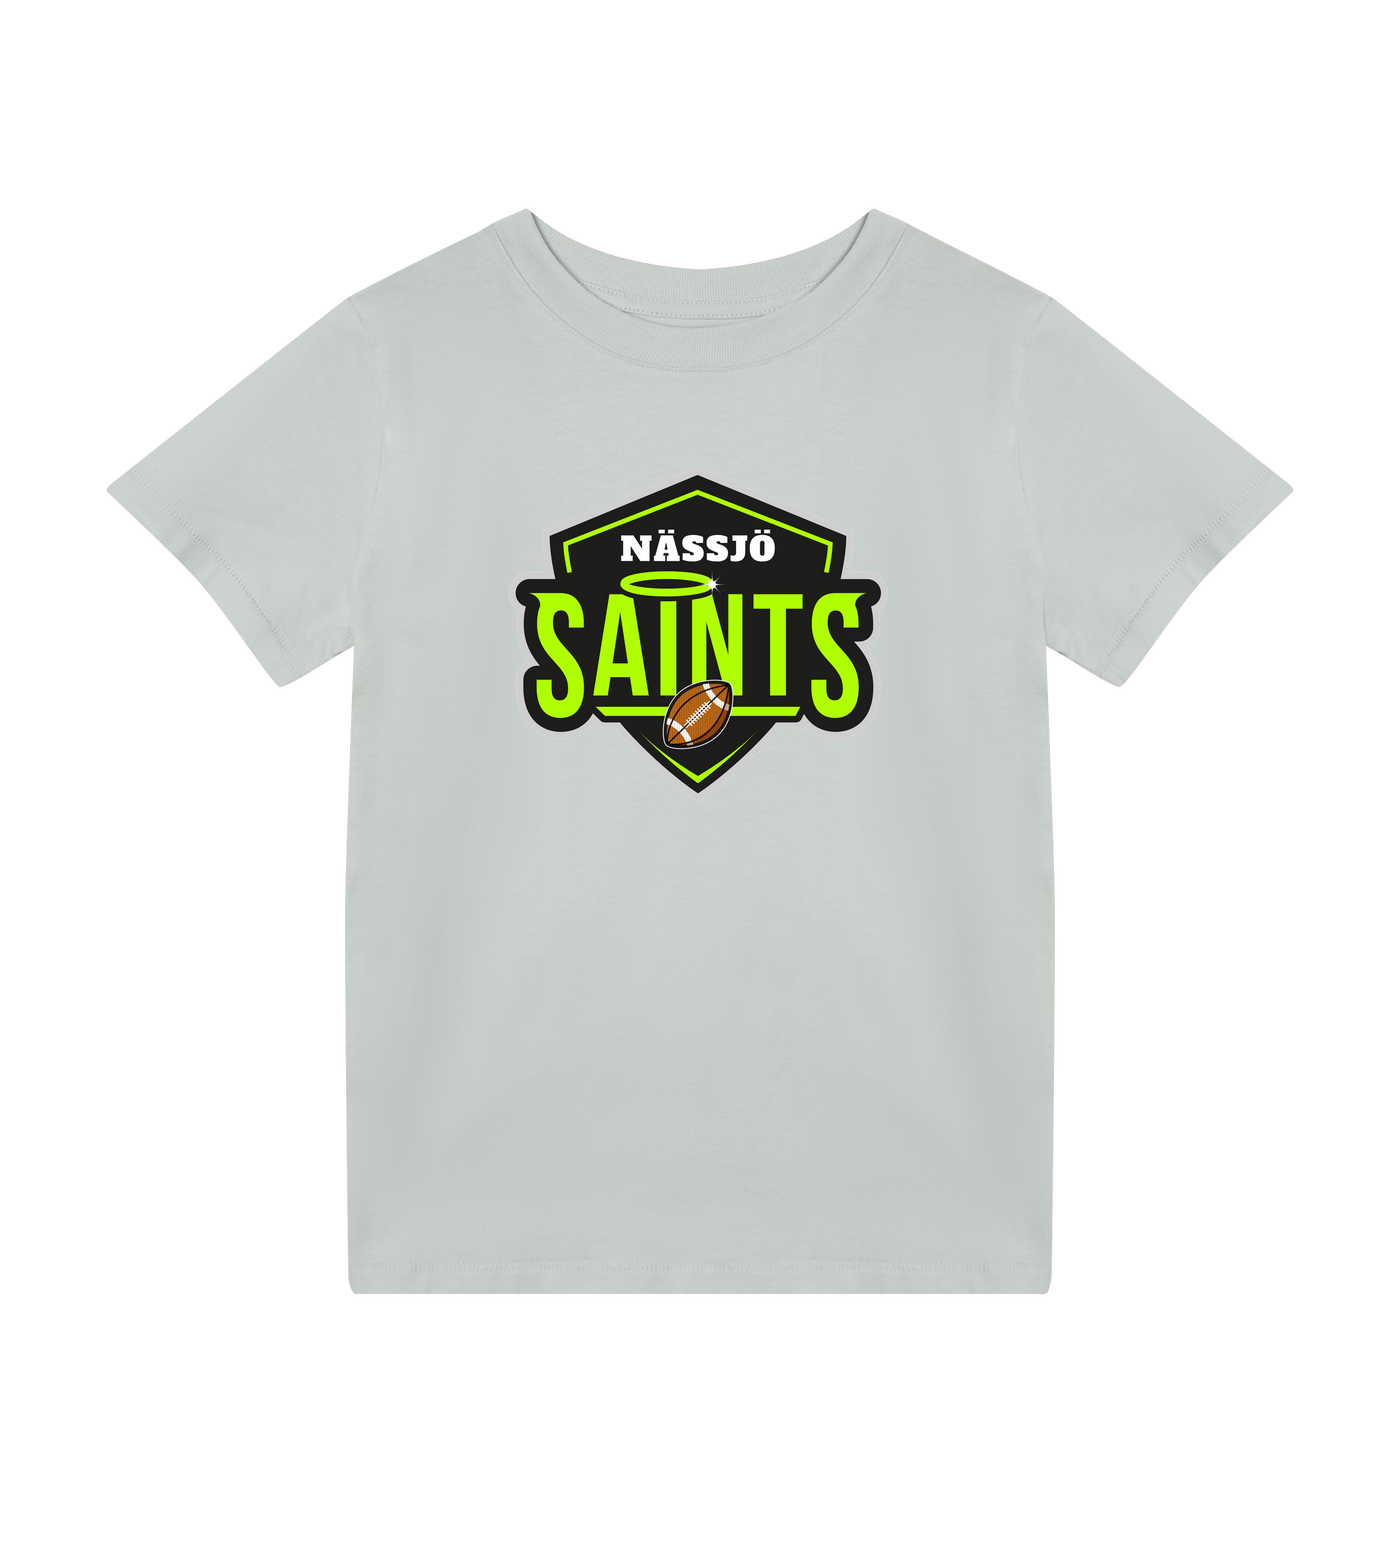 Nässjö Saints Kids Tee - Premium t-shirt from REYRR STUDIO - Shop now at Reyrr Athletics